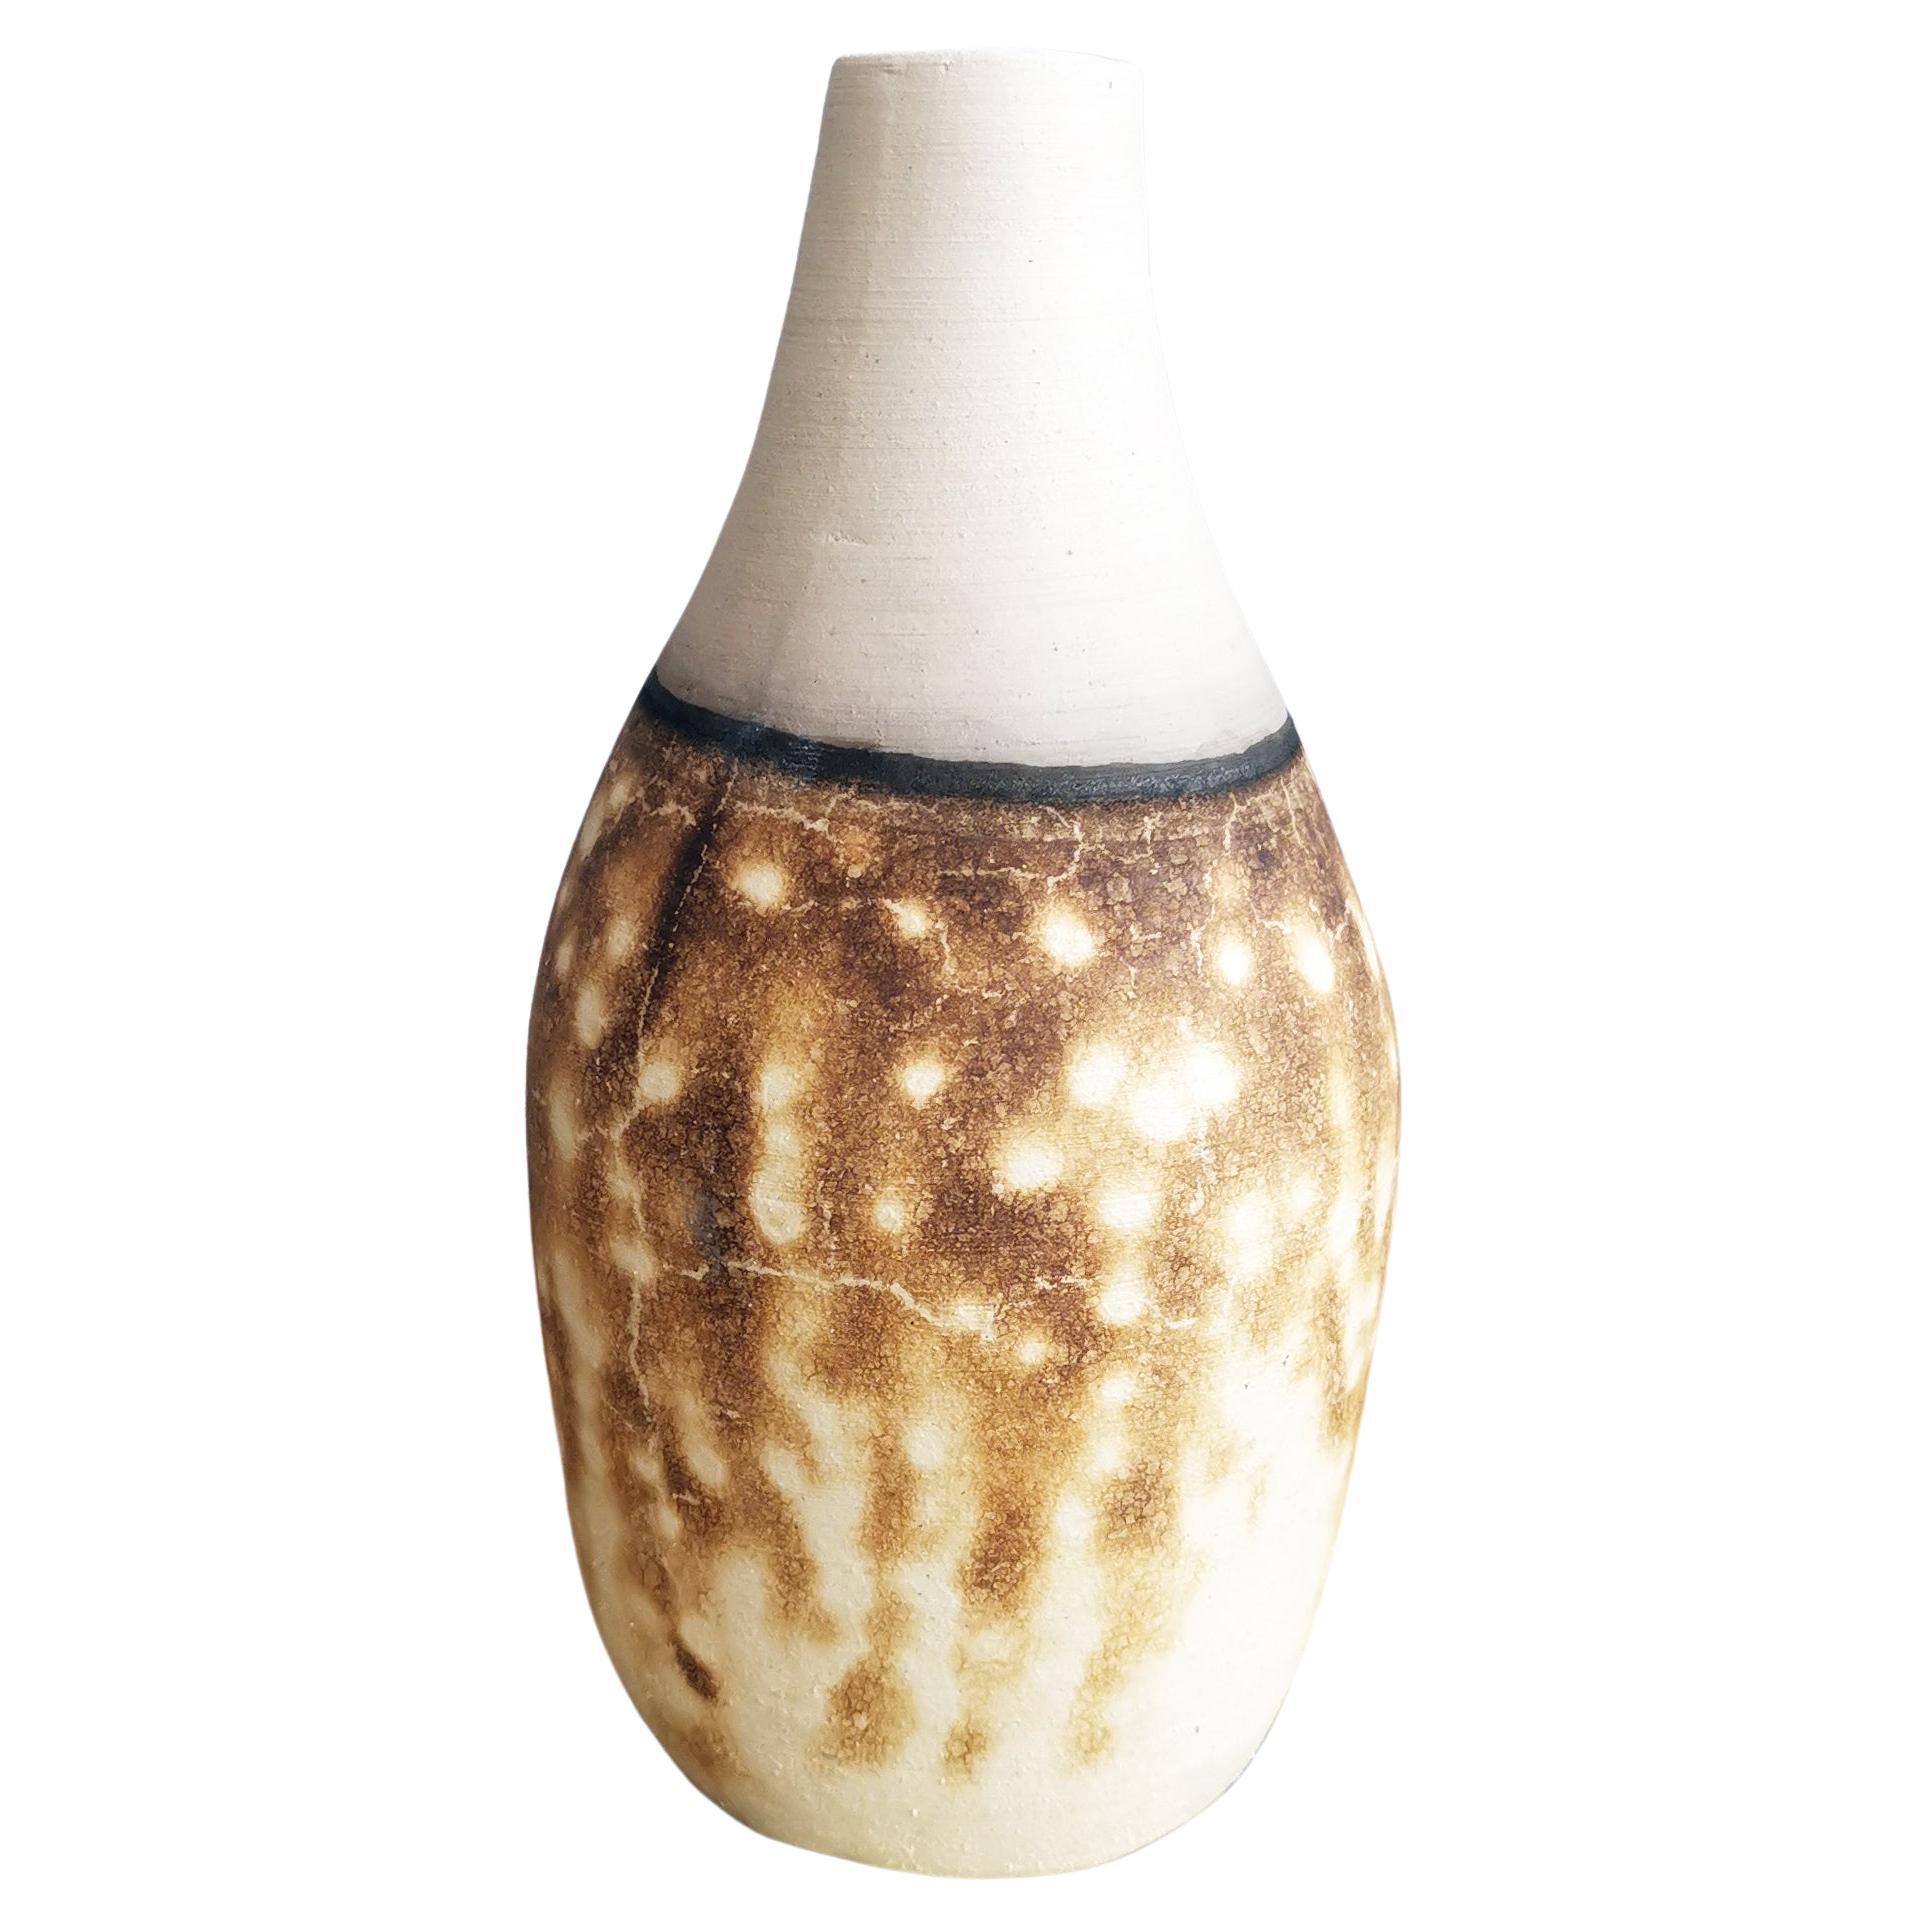 Natsu Raku Pottery Vase - Obvara - Handmade Ceramic Home Decor Gift